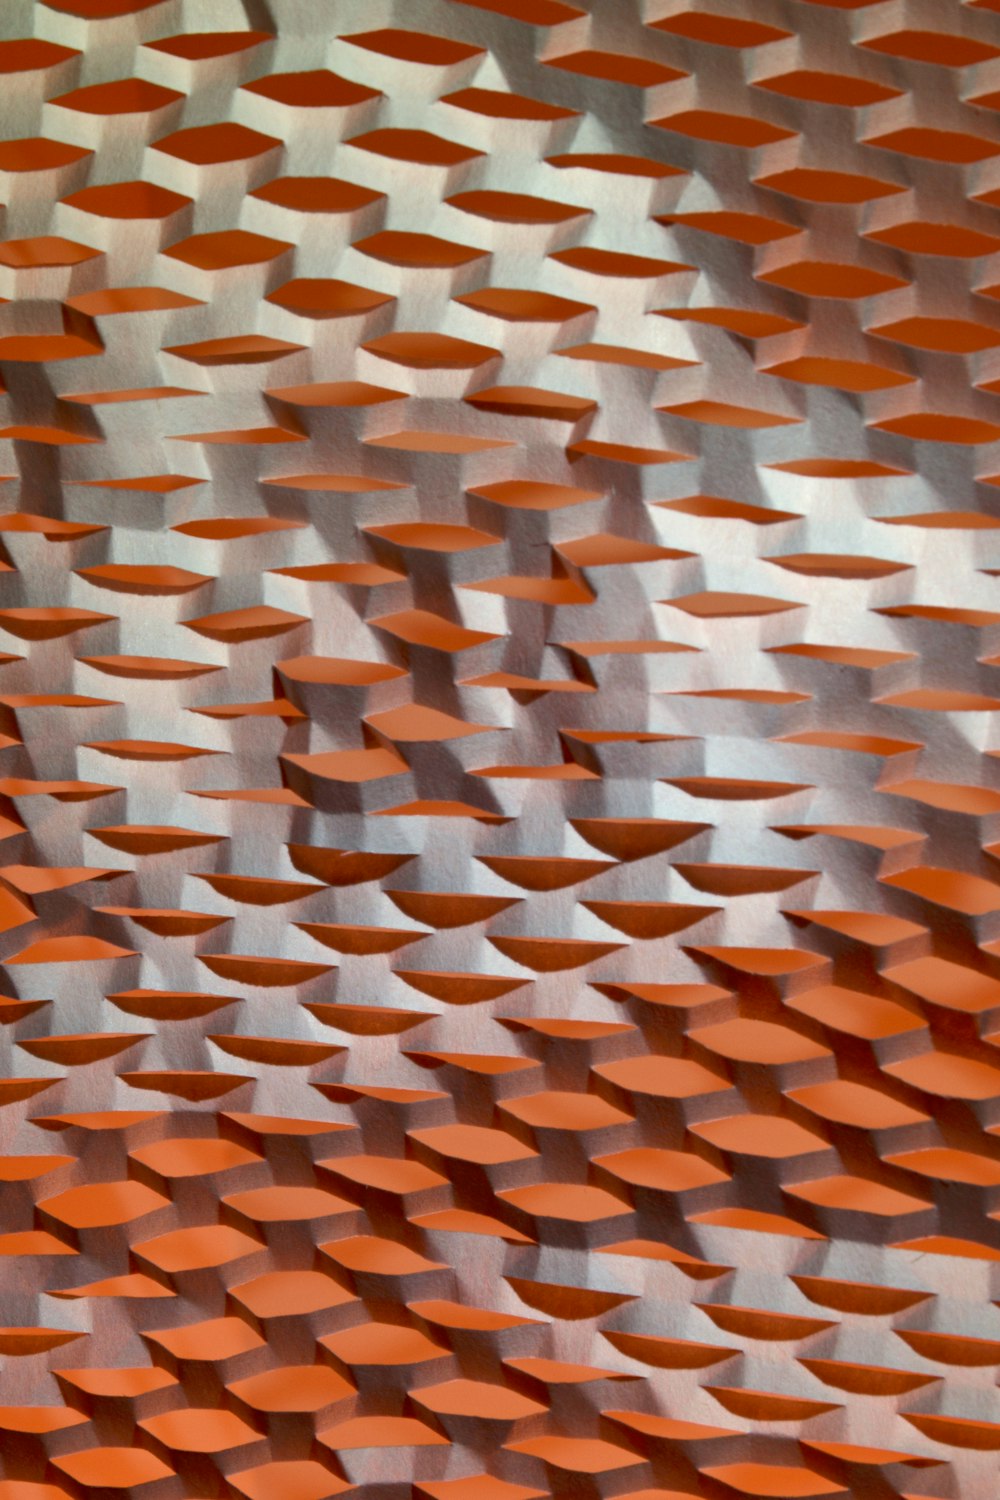 an abstract photo of a wall made of orange bricks